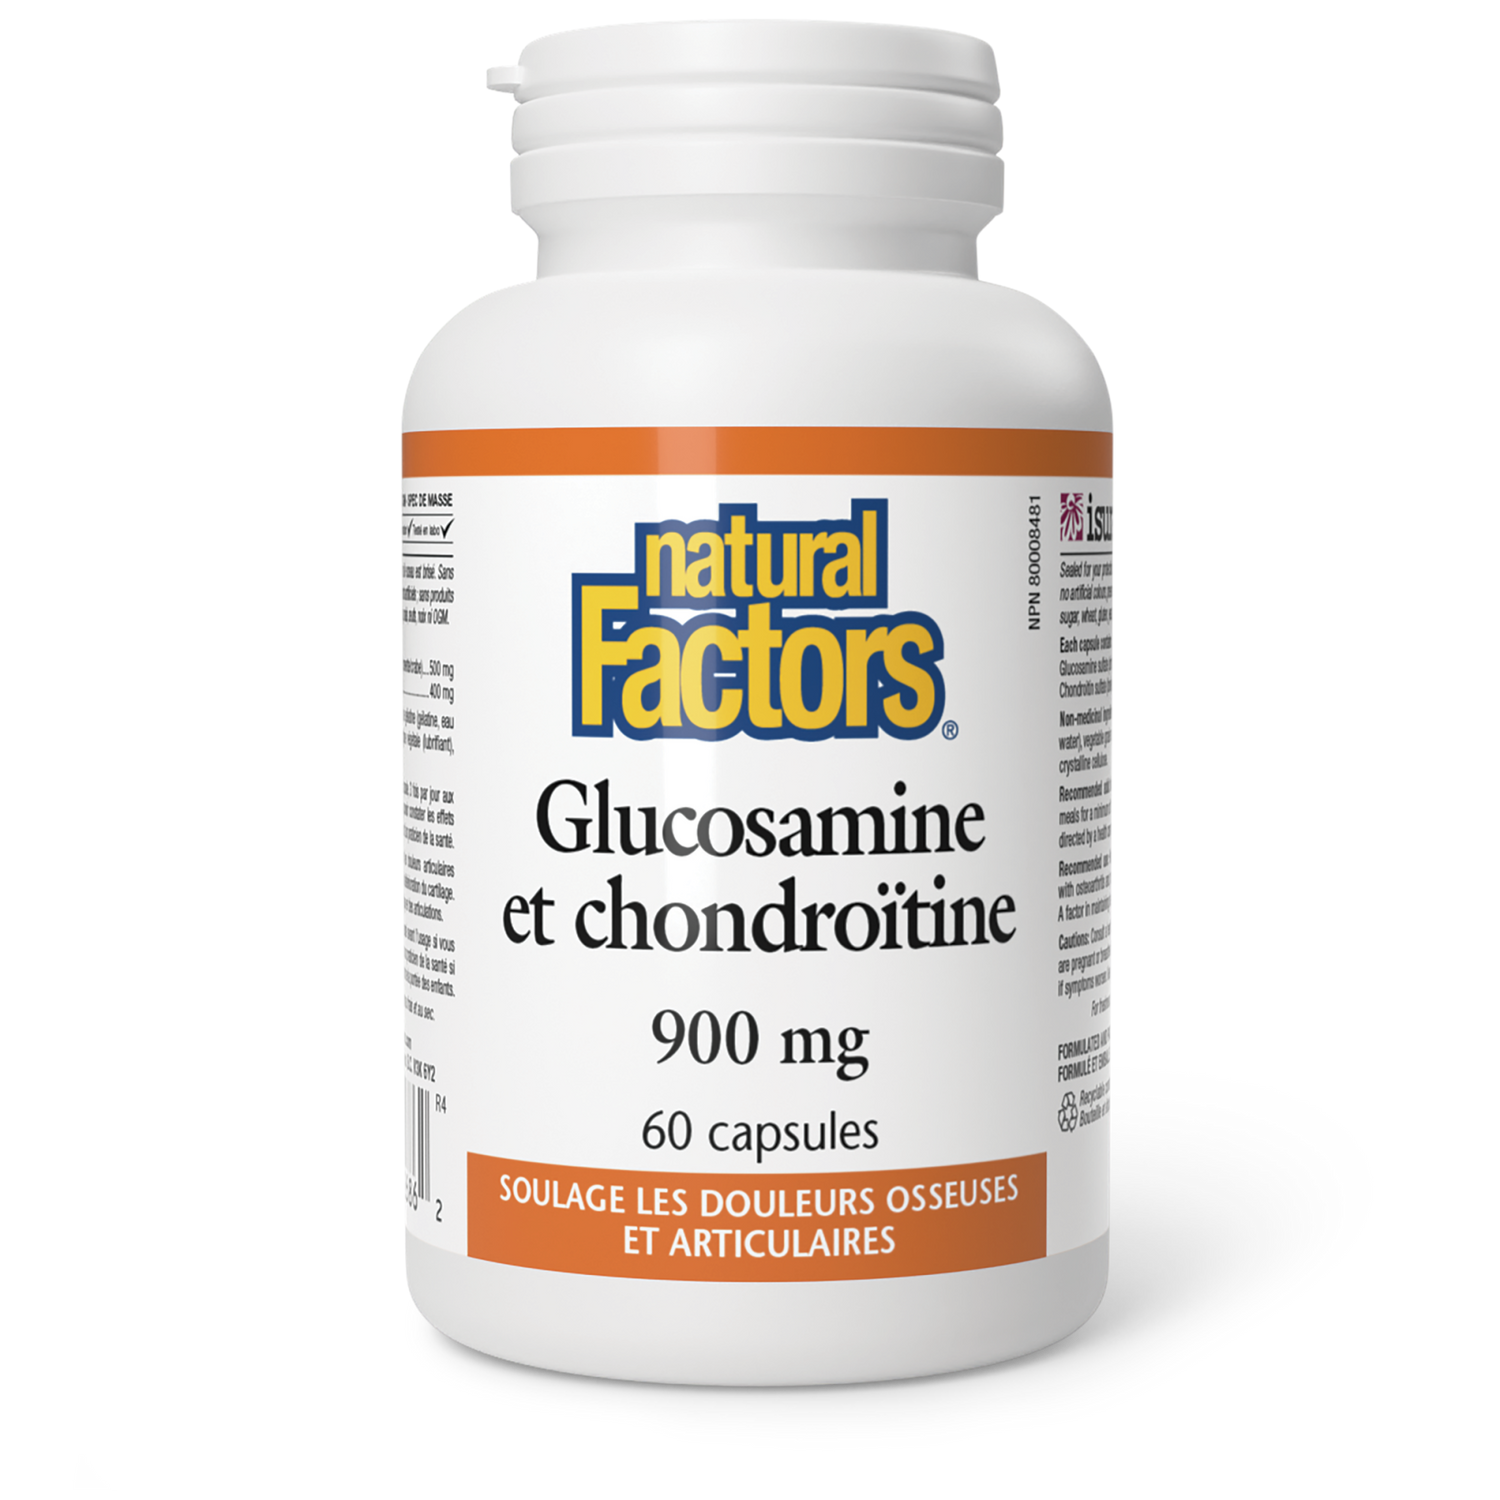 Sulfates de glucosamine et chondroïtine 900 mg pour Natural Factors |variant|hi-res|2686